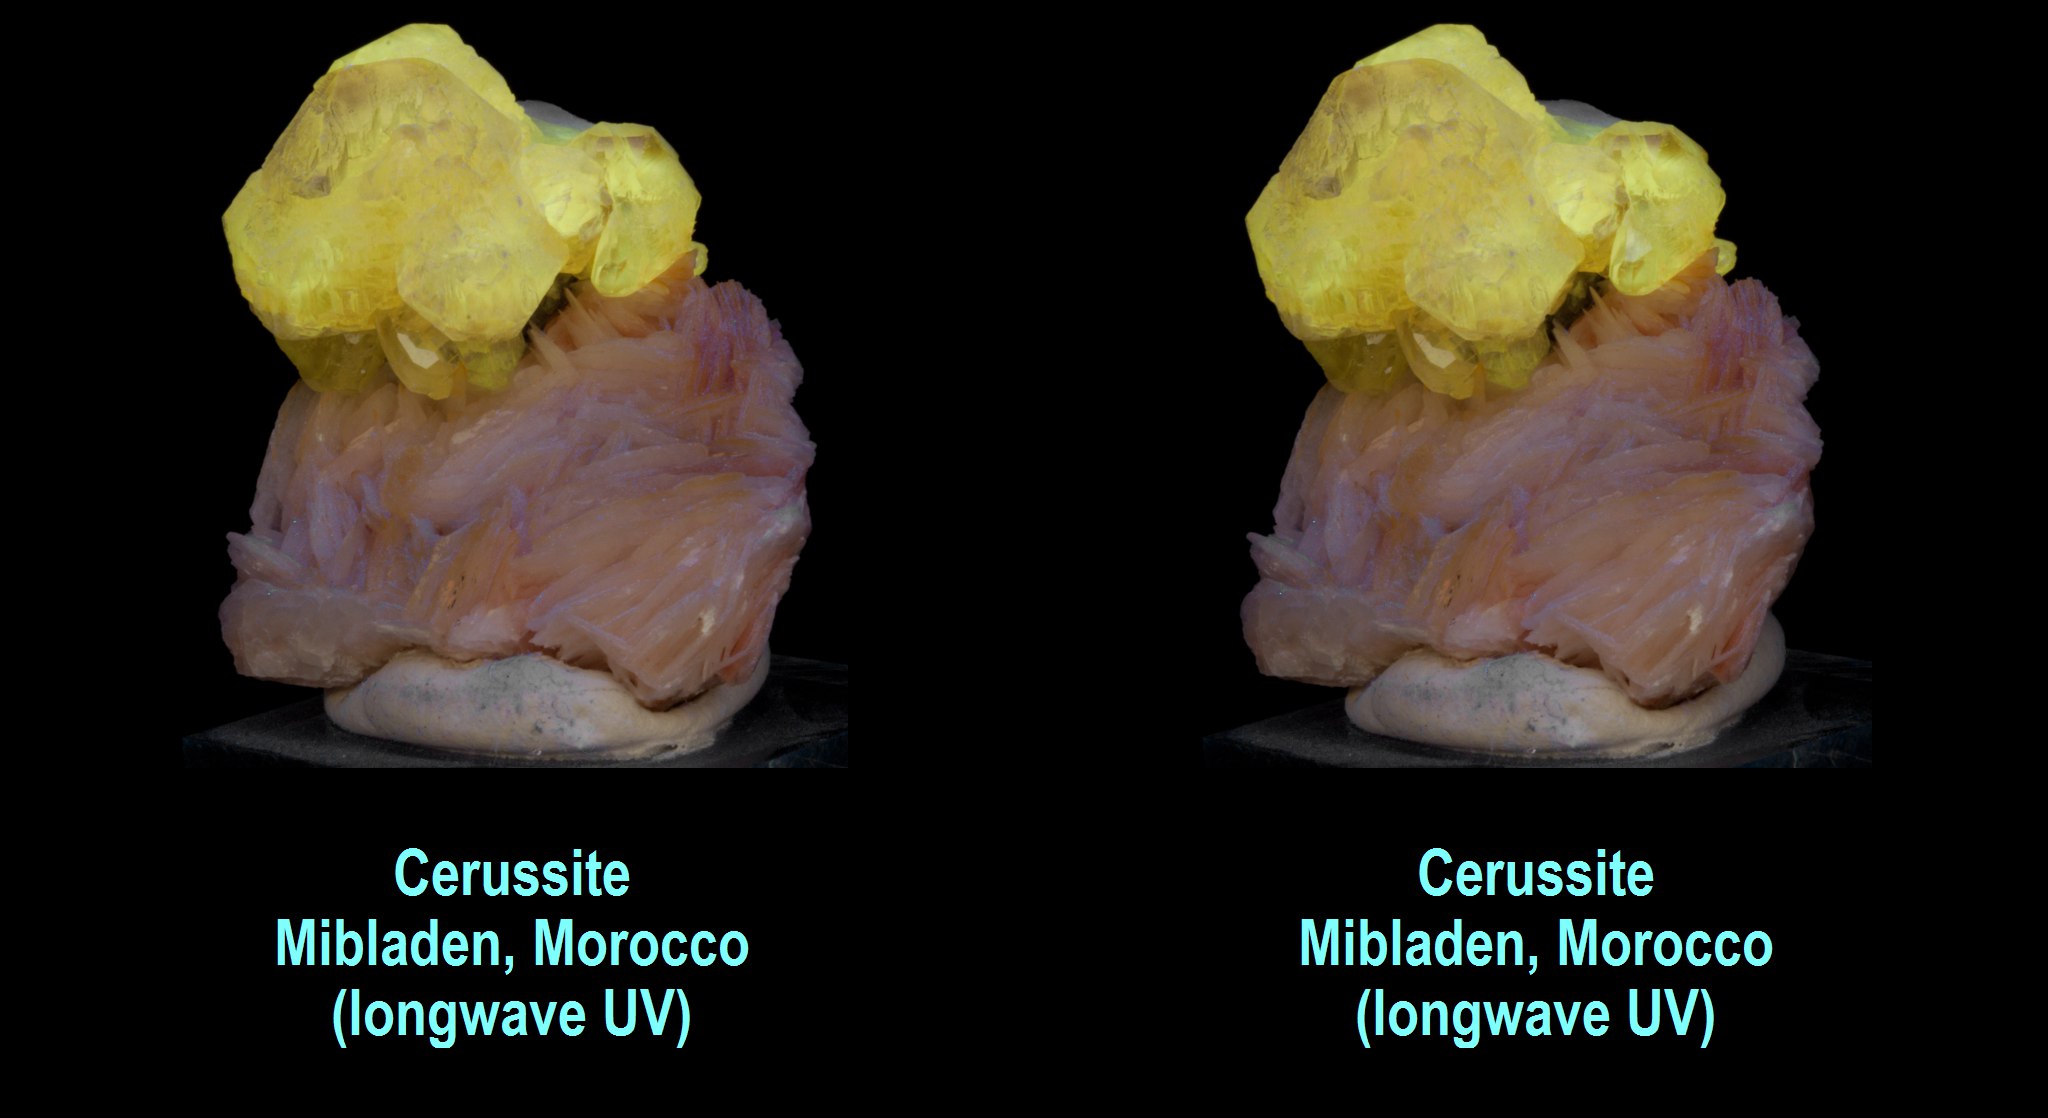 Cerussite - Mibladen, Morocco (longwave UV)